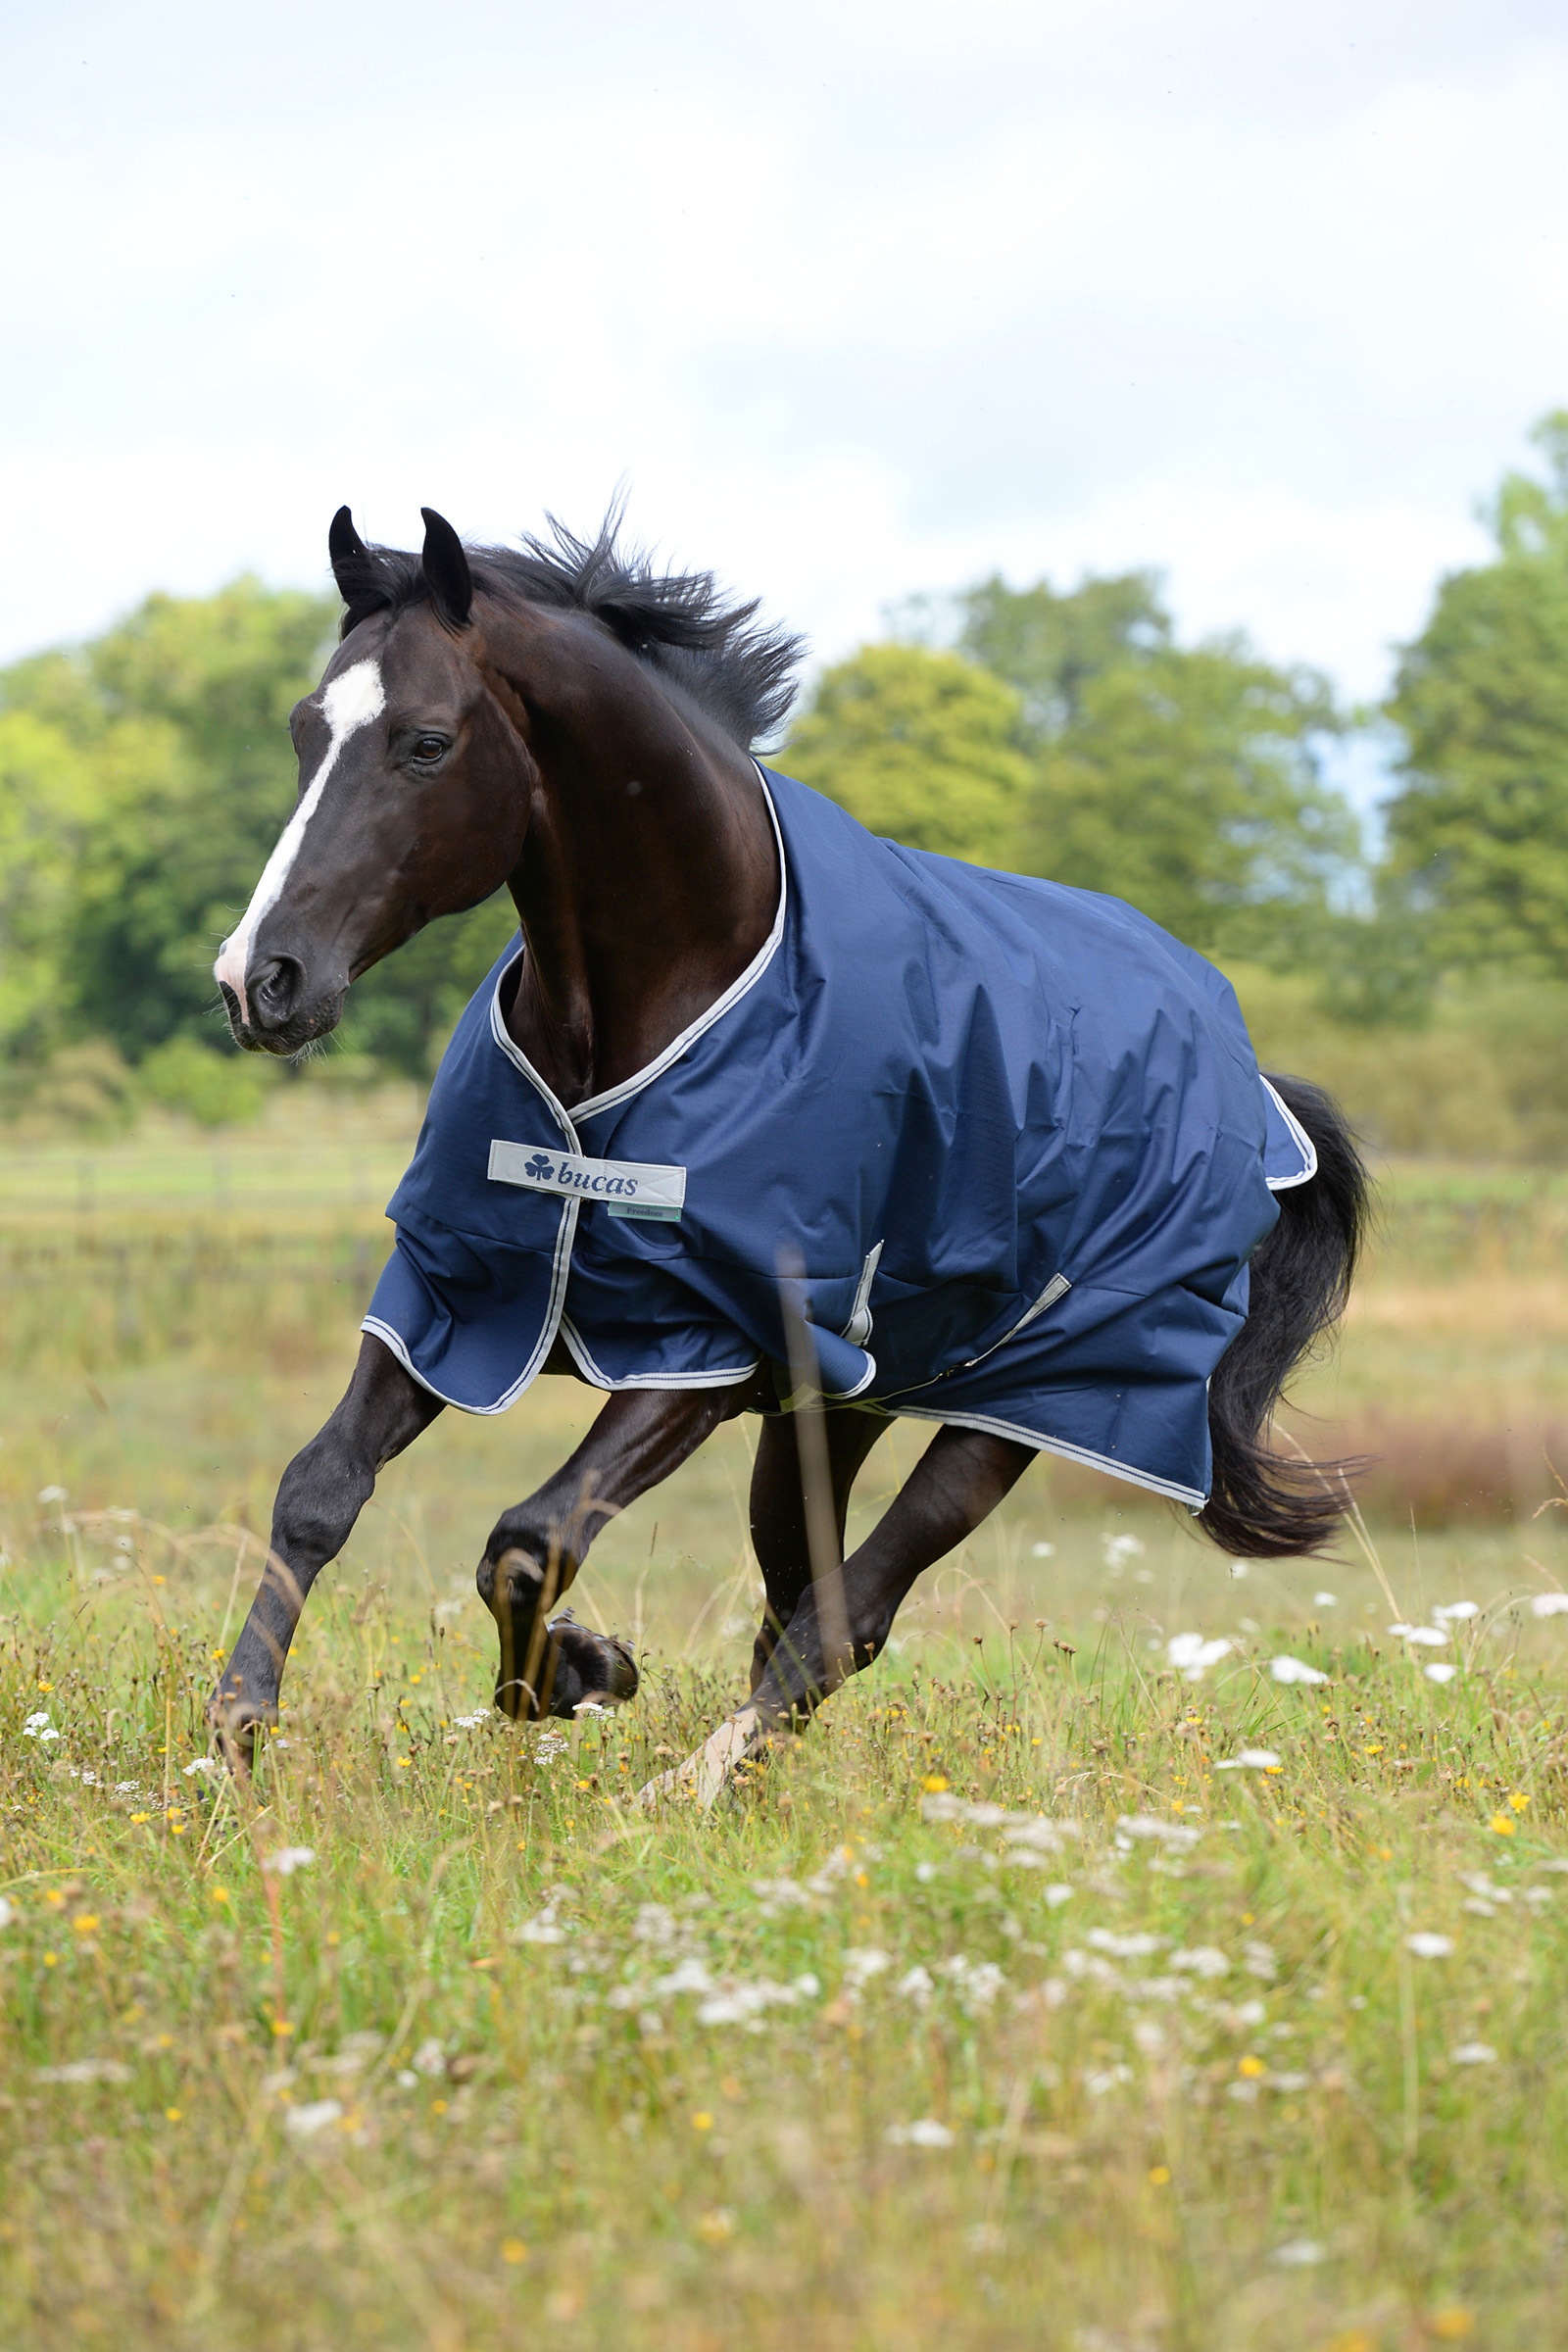 Pasture Mundtlig Overlegenhed Buy Bucas Freedom Turnout 150g, pony rug | horze.com